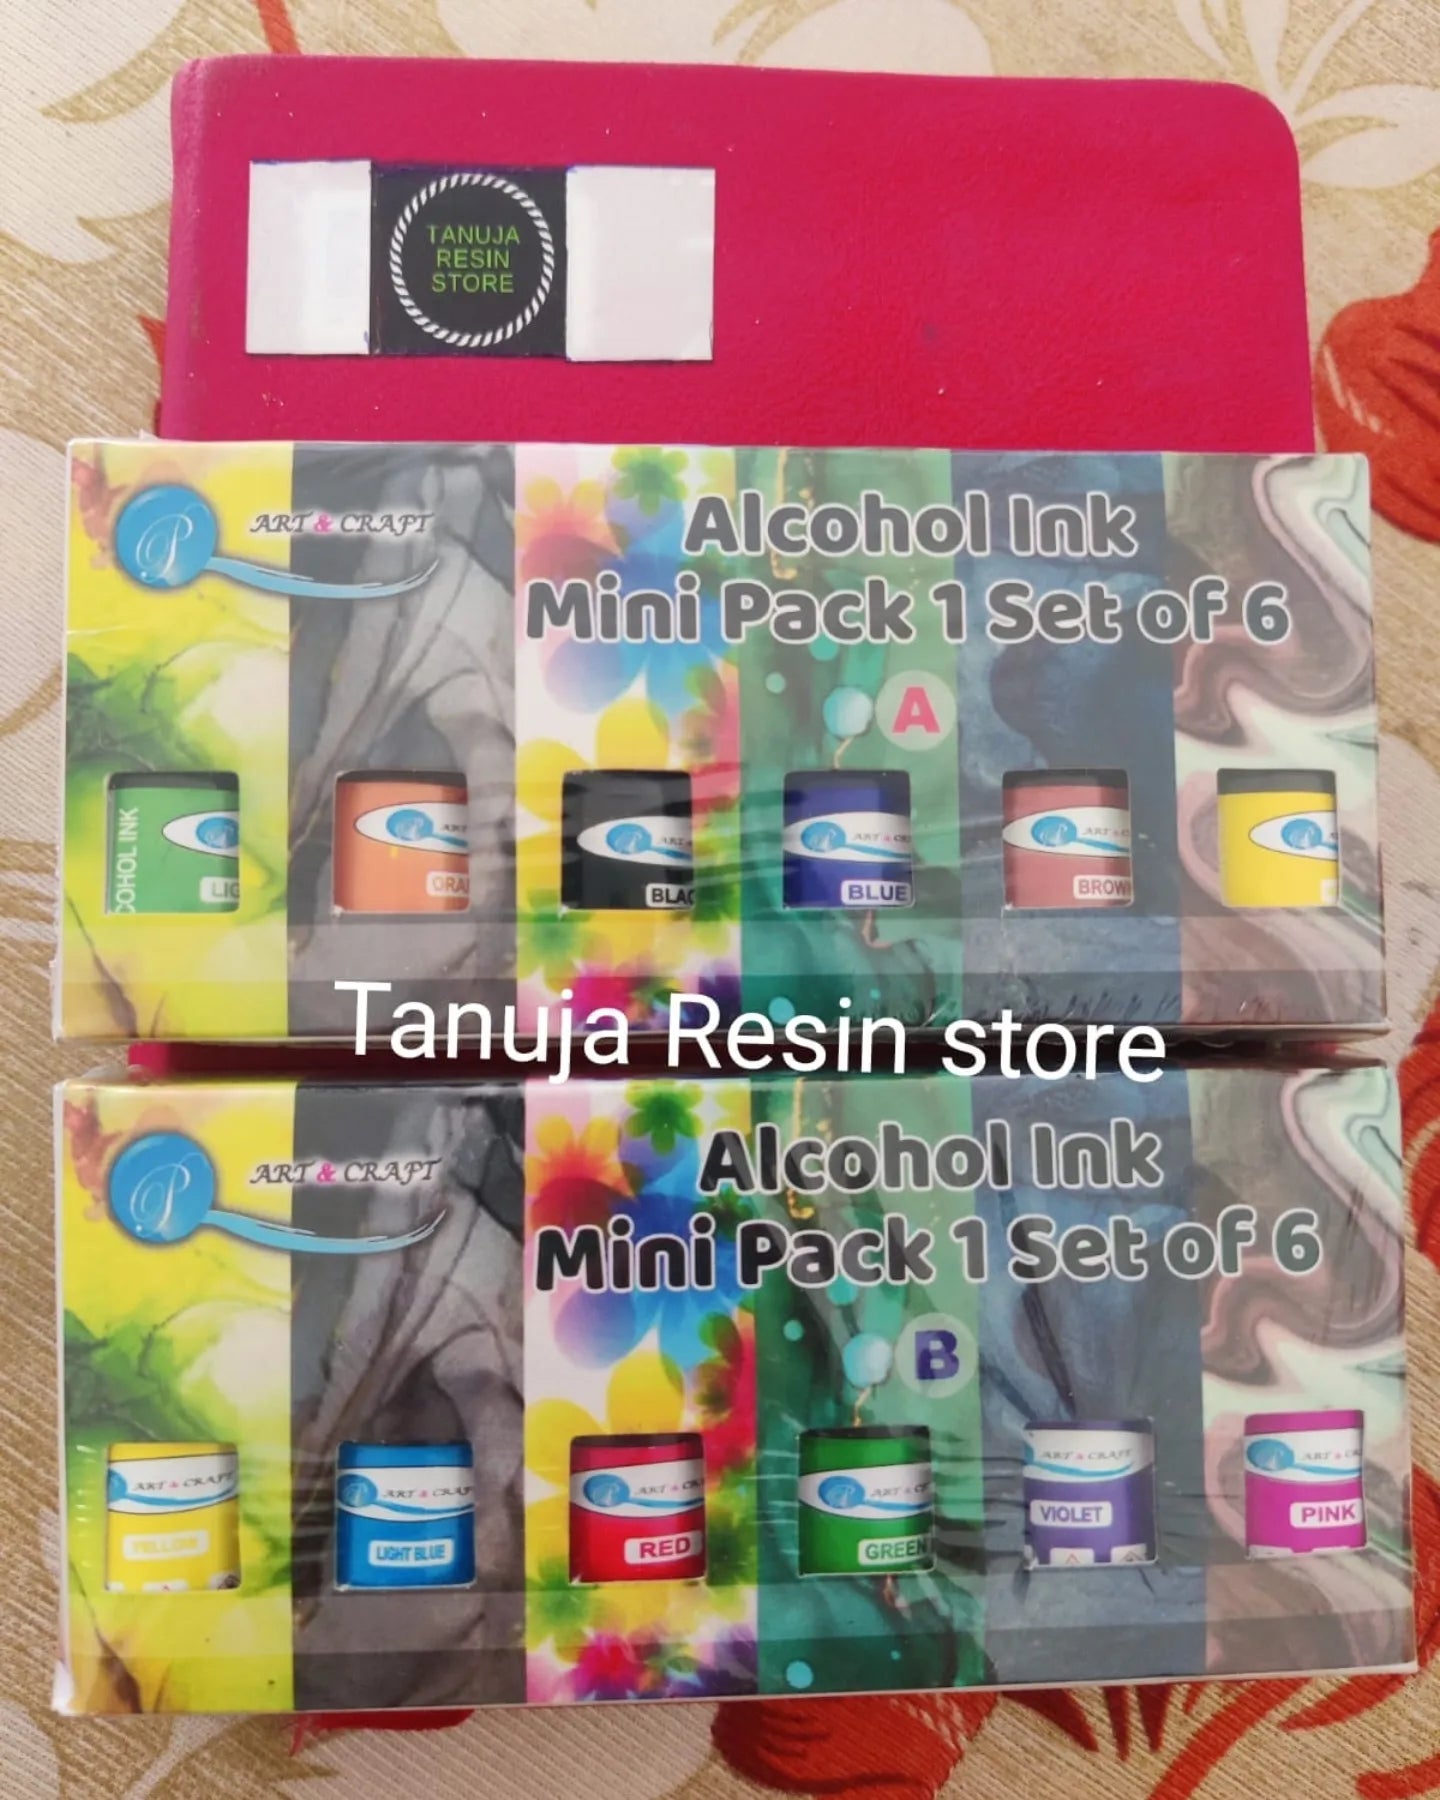 Alcohol ink mini pack set of 6 - Set A